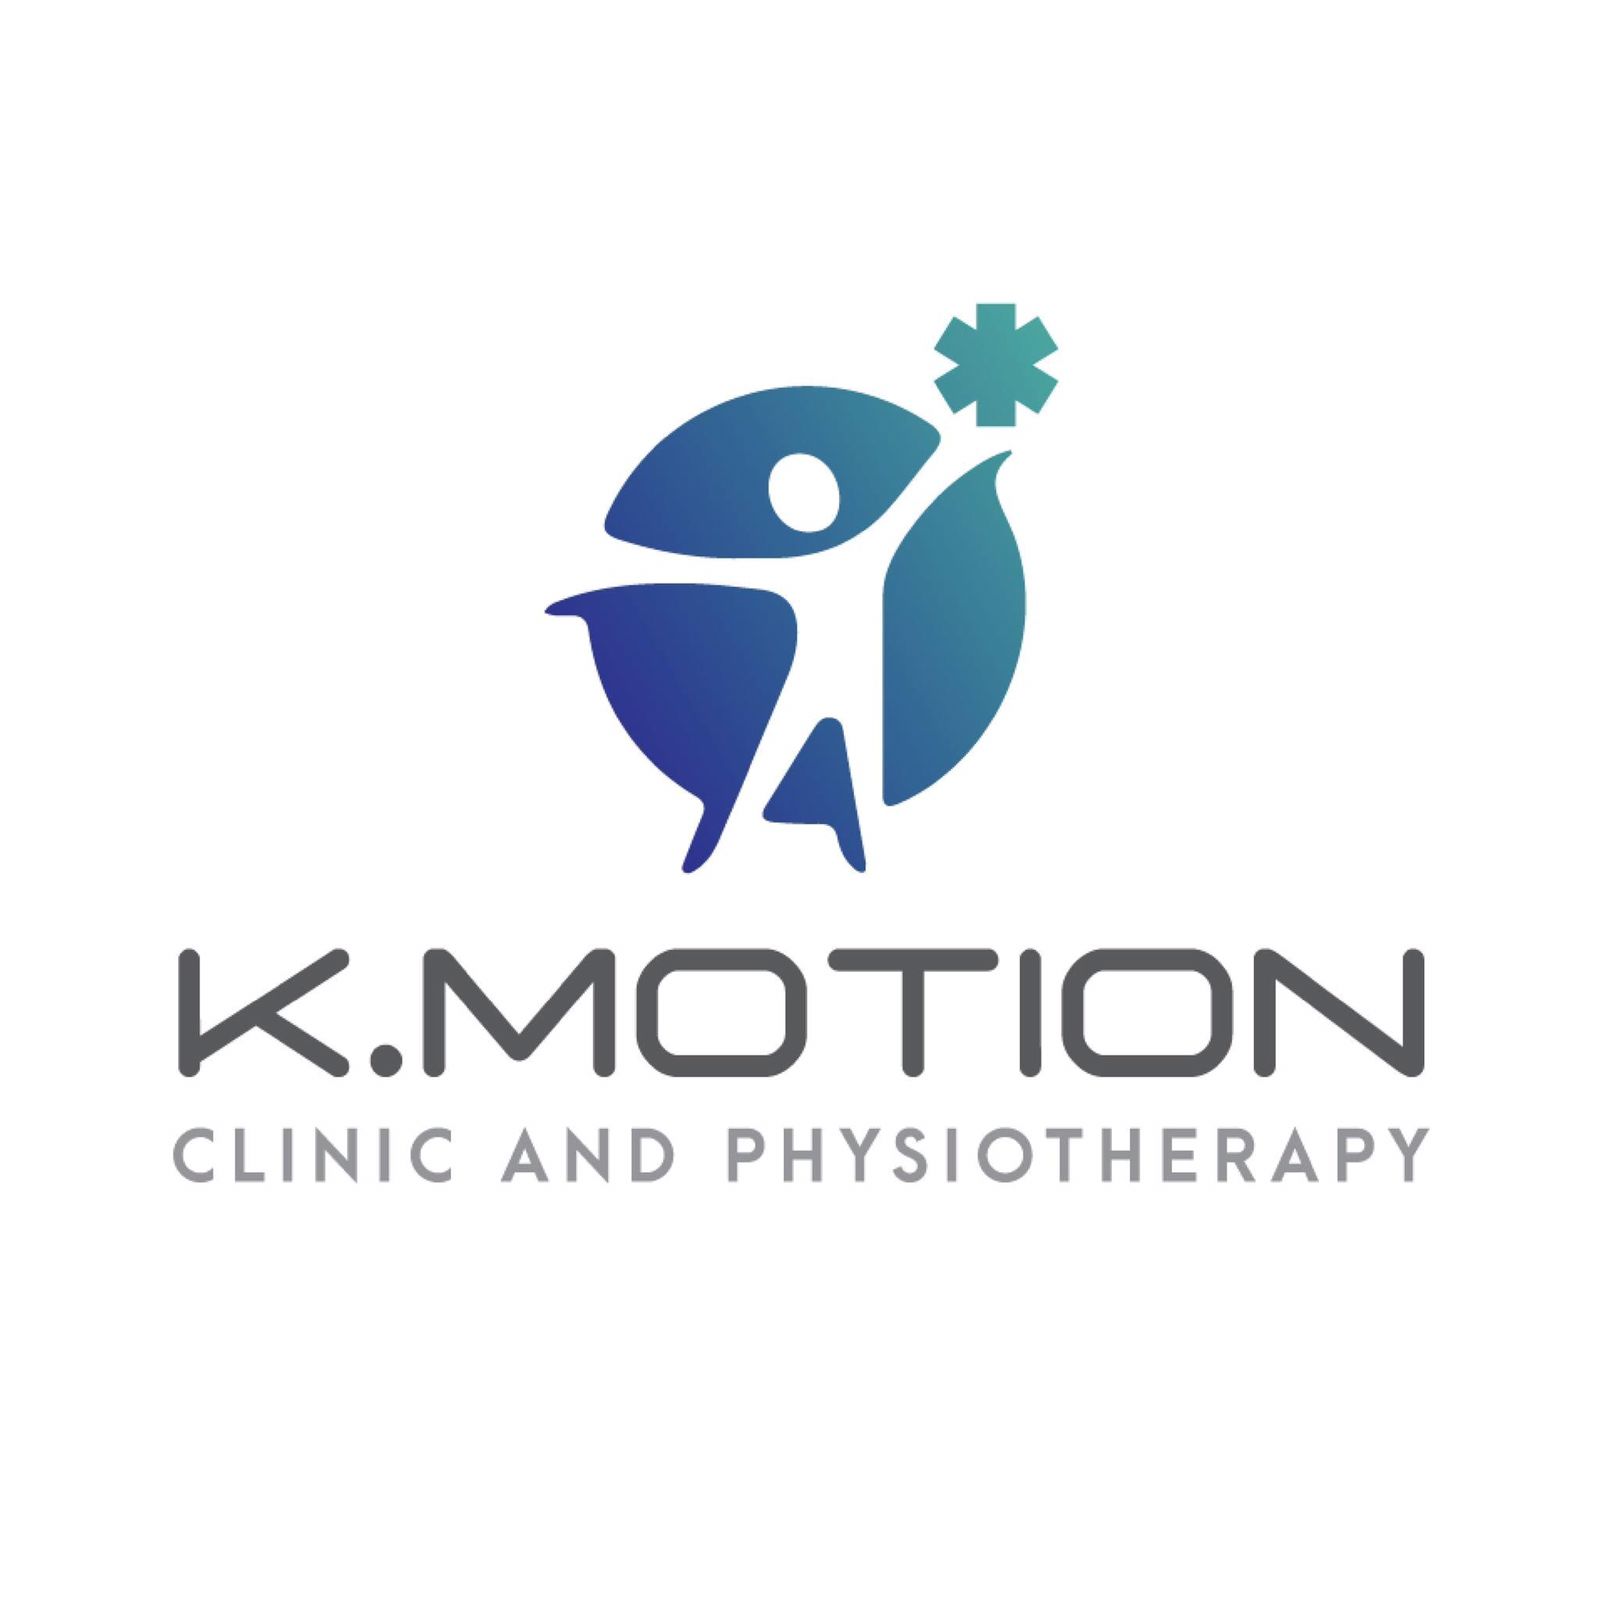 Clinic K. Motion